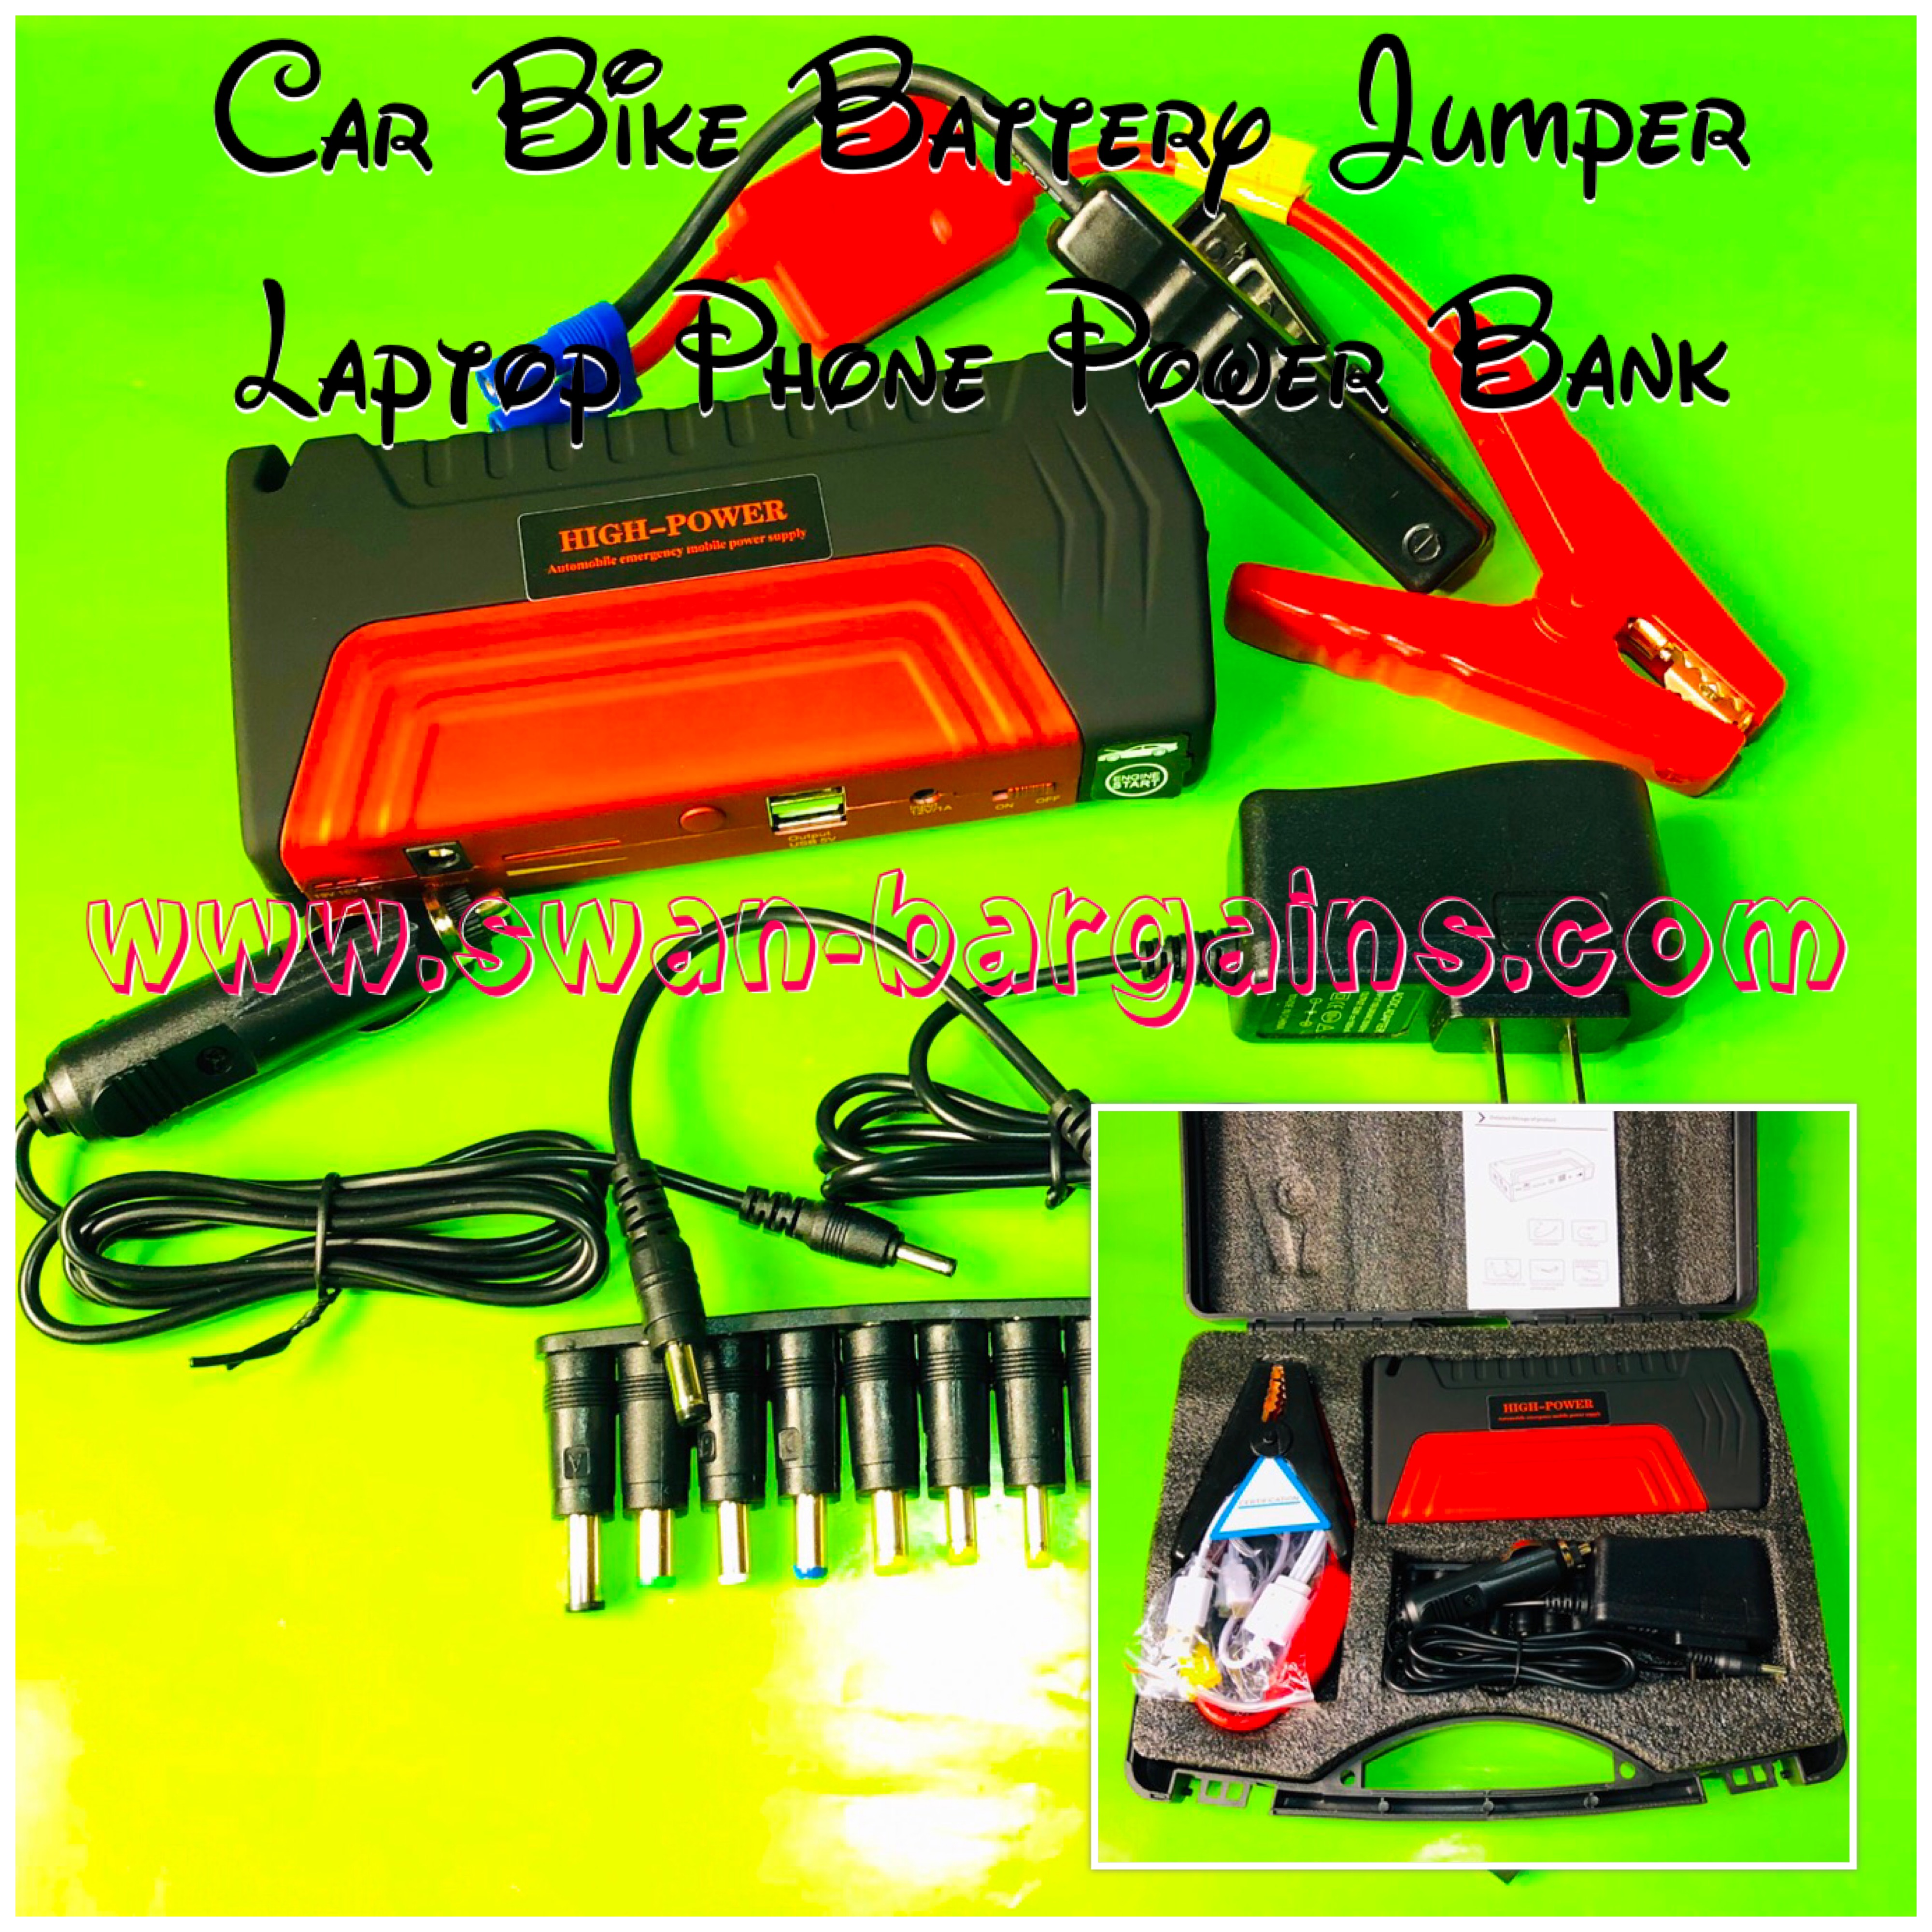 Portable Car Battery Jumper Powerbank Kit Singapore - 68800mAh - Red